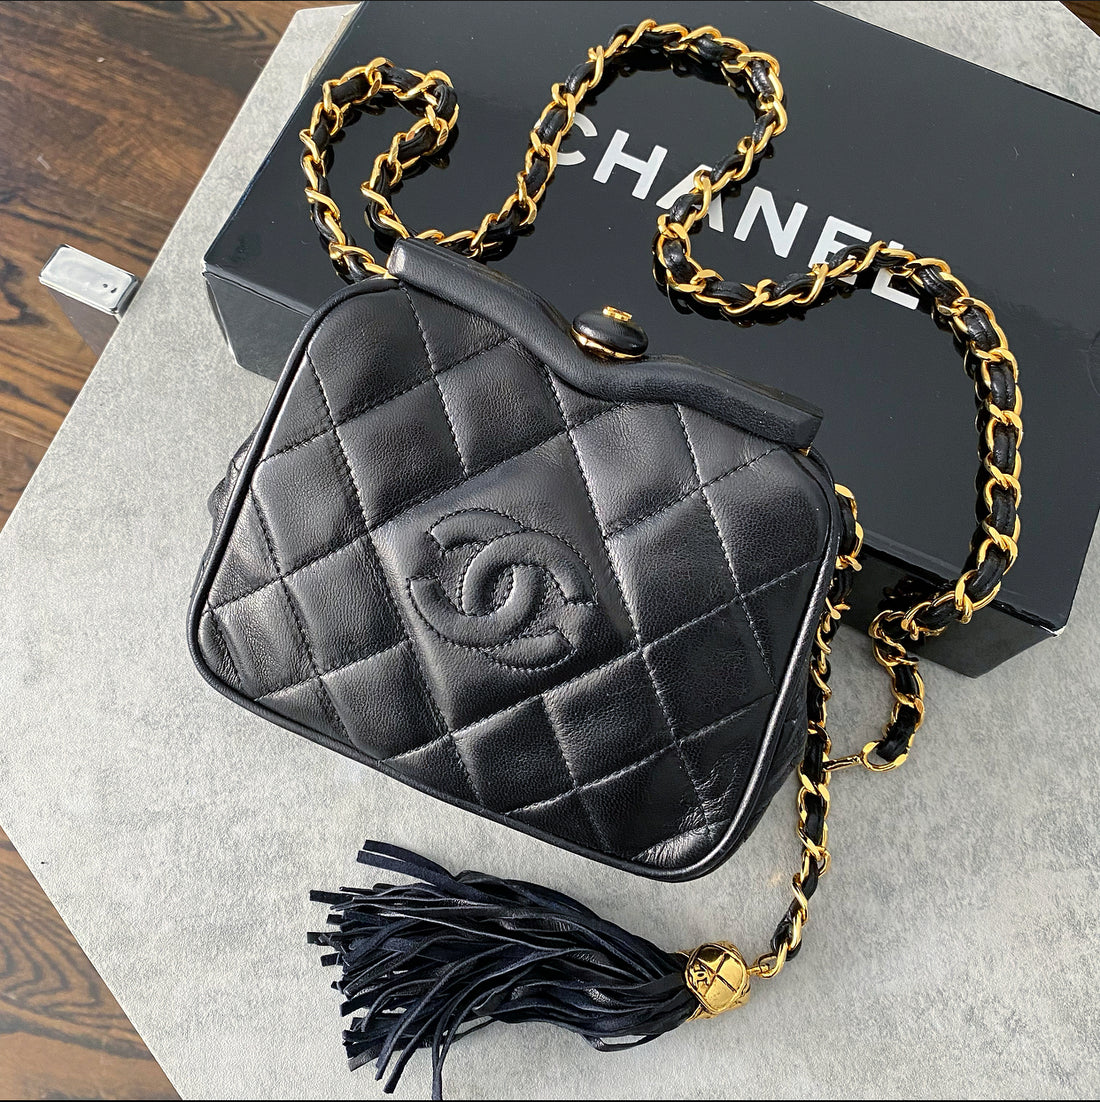 Chanel Vintage 1989 Black Lambskin Quilted Chain Belt Bag